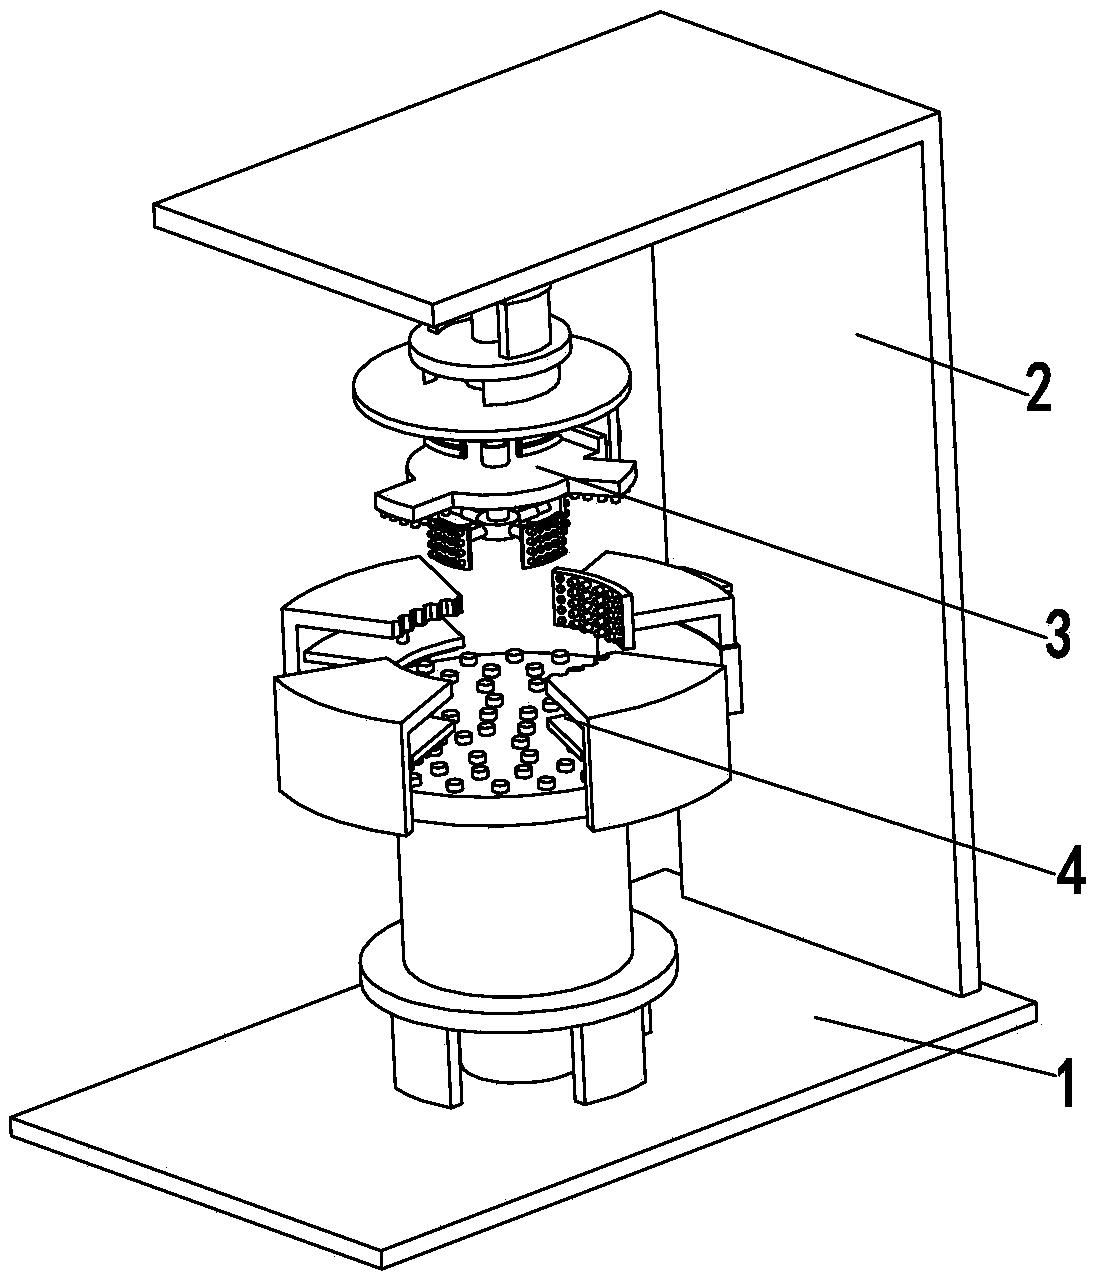 Surface automatic polishing machine for flange